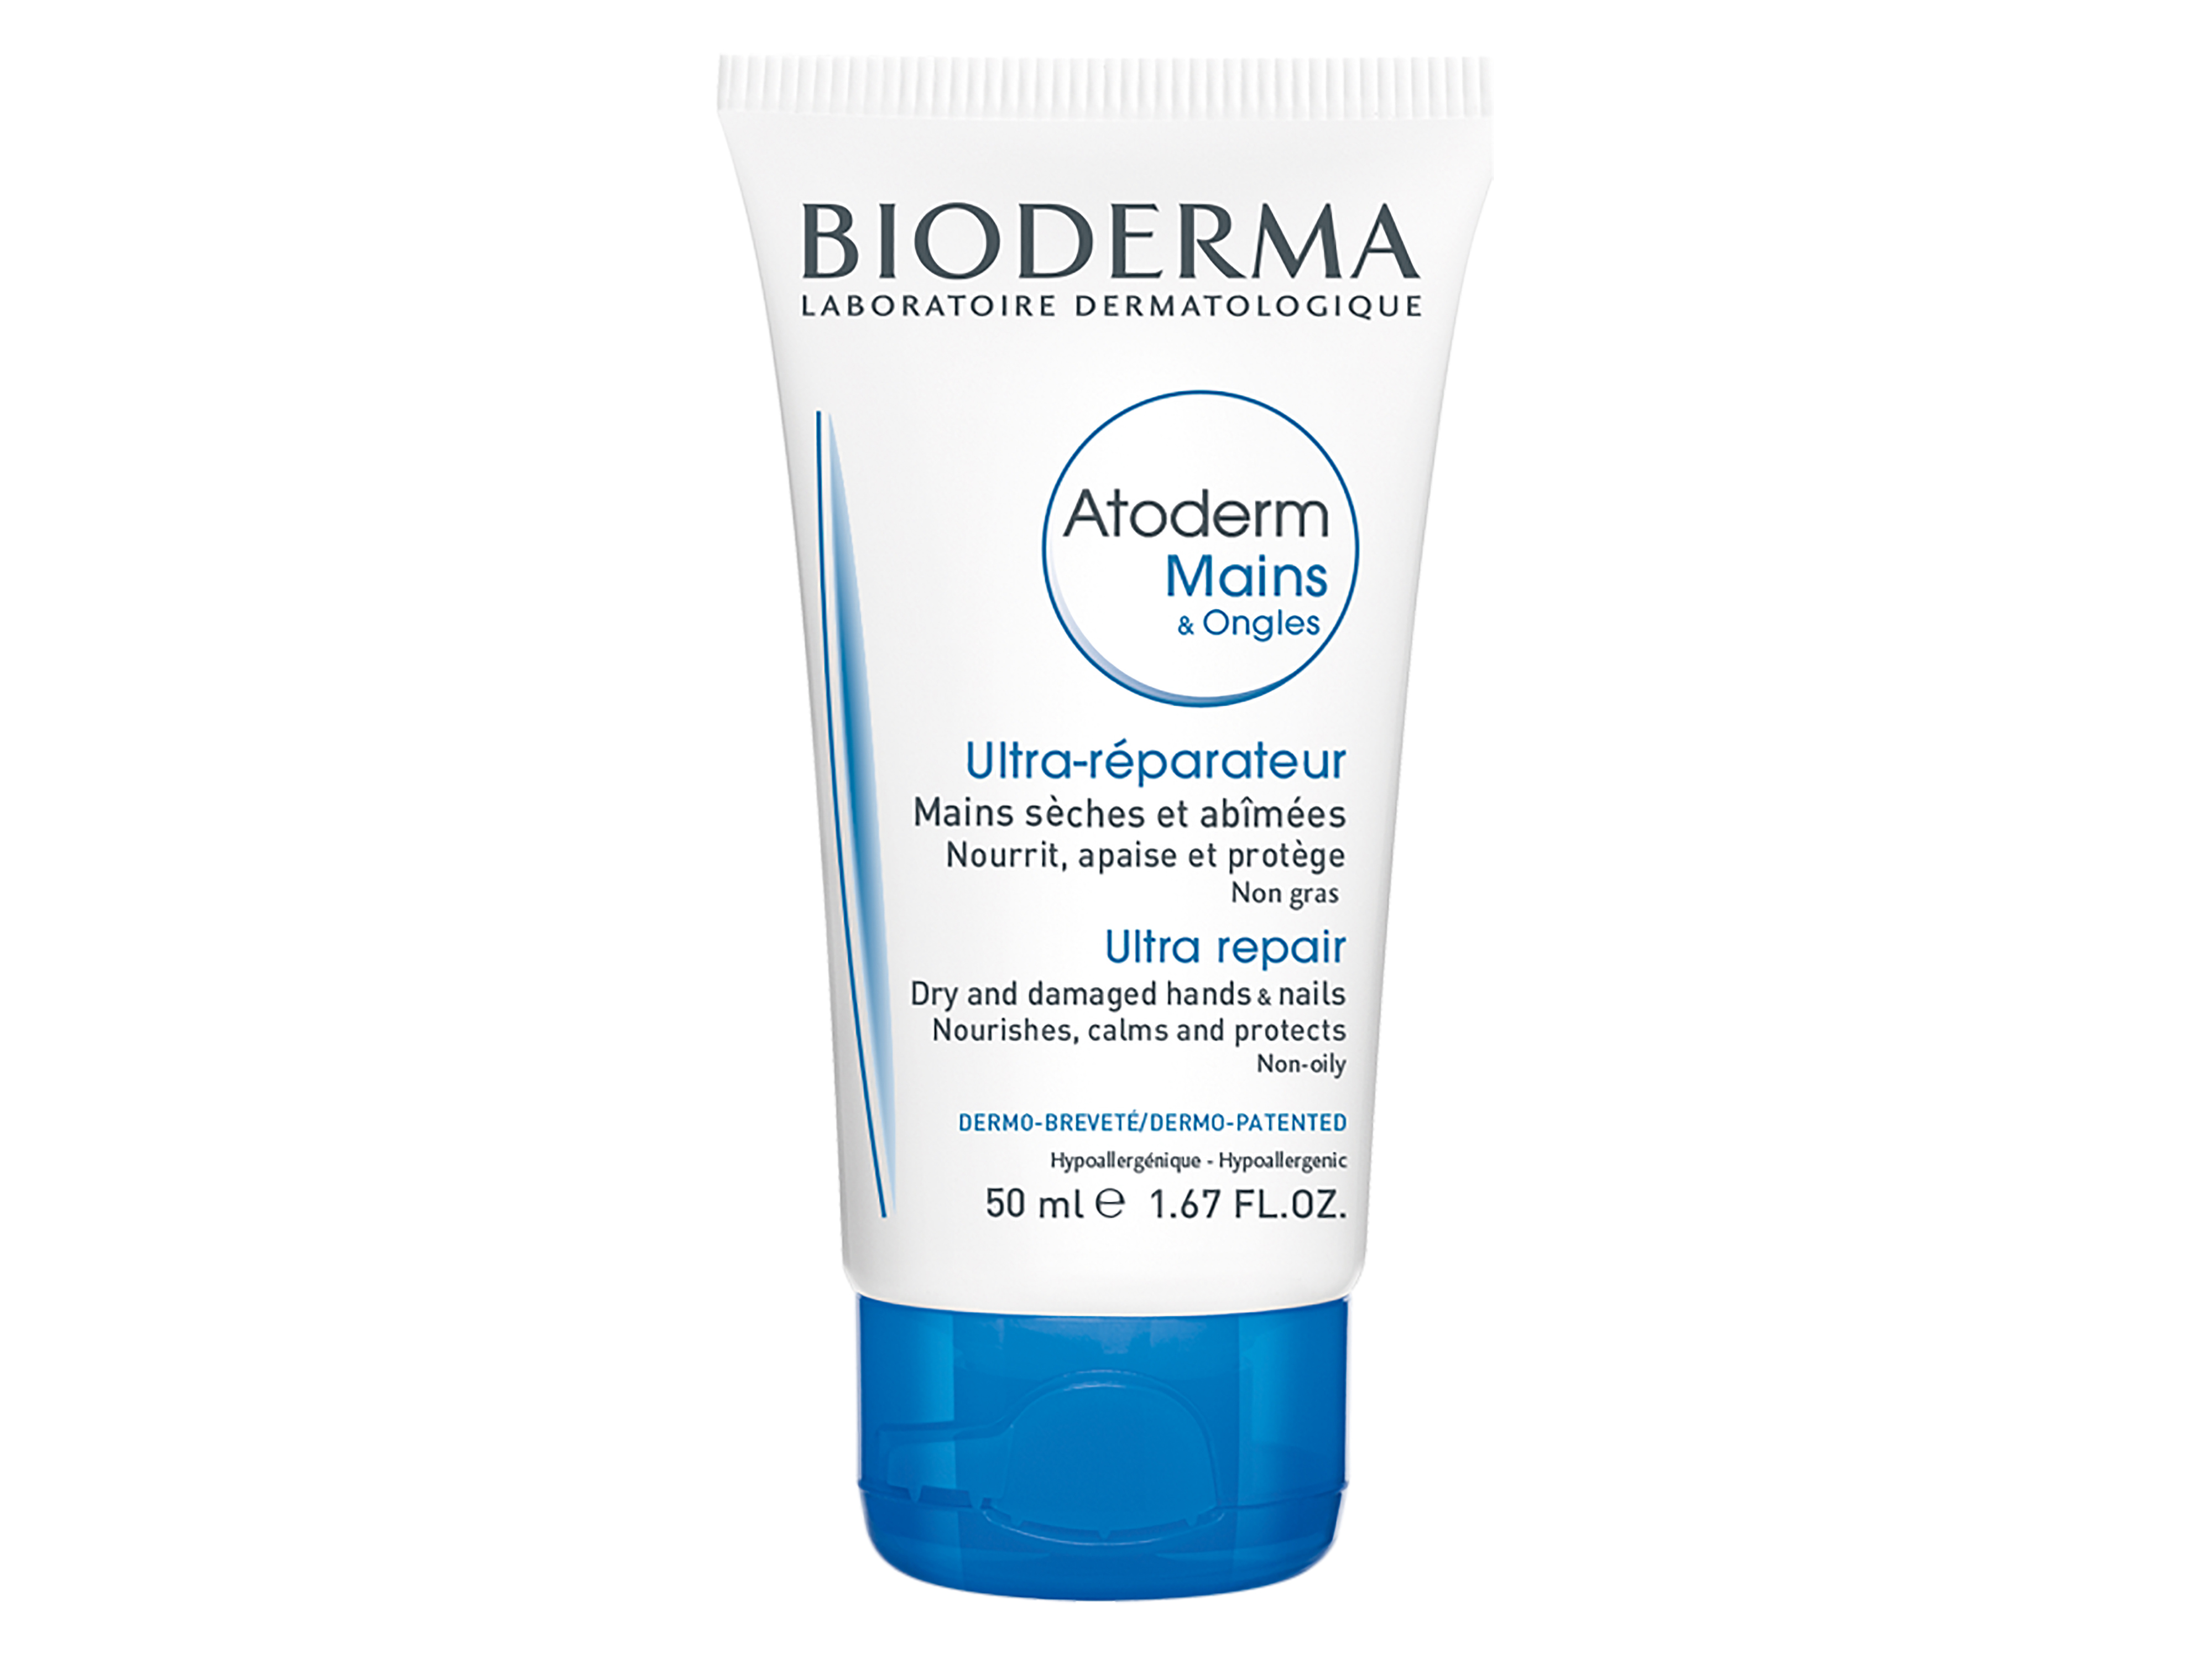 Bioderma Atoderm Mains & Ongles, 50 ml